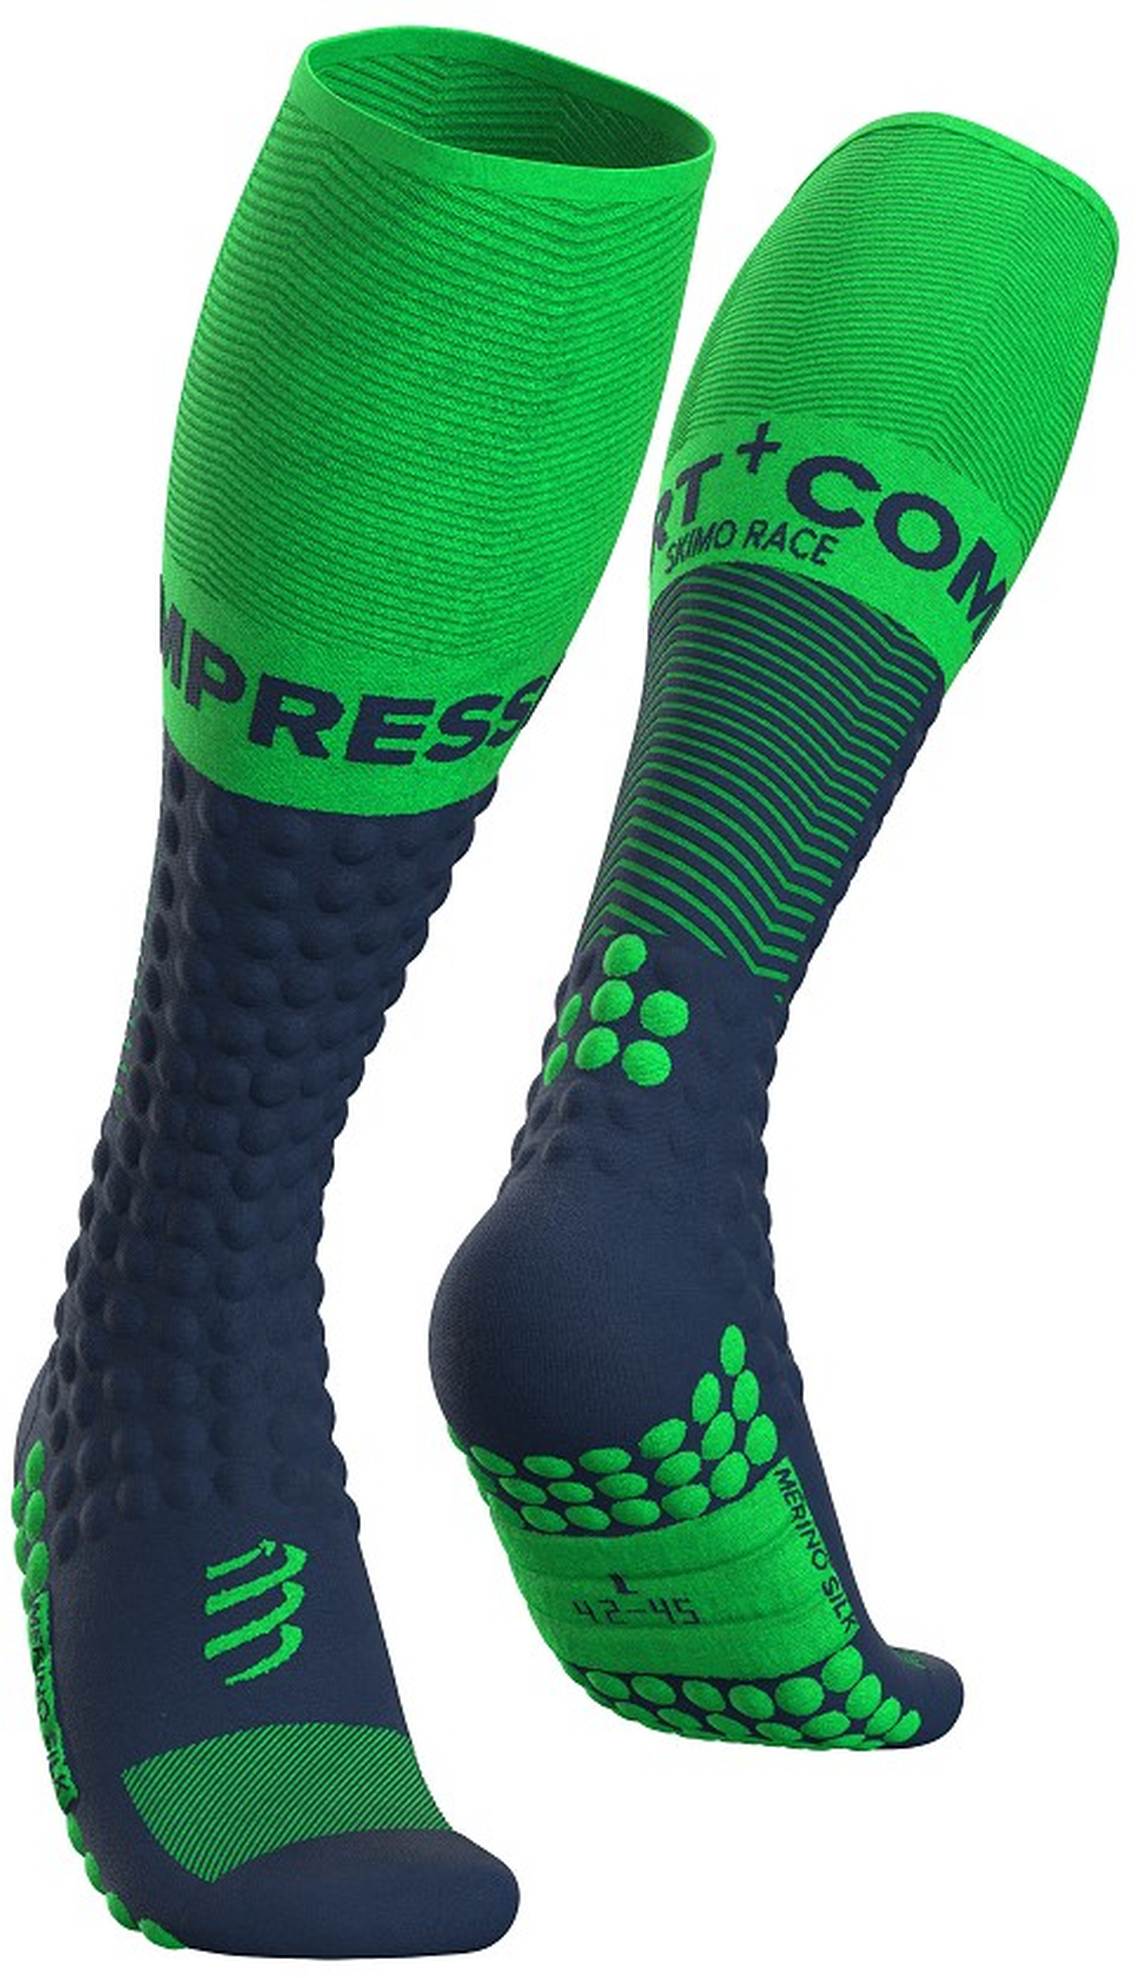 Winter compression mid-calf socks